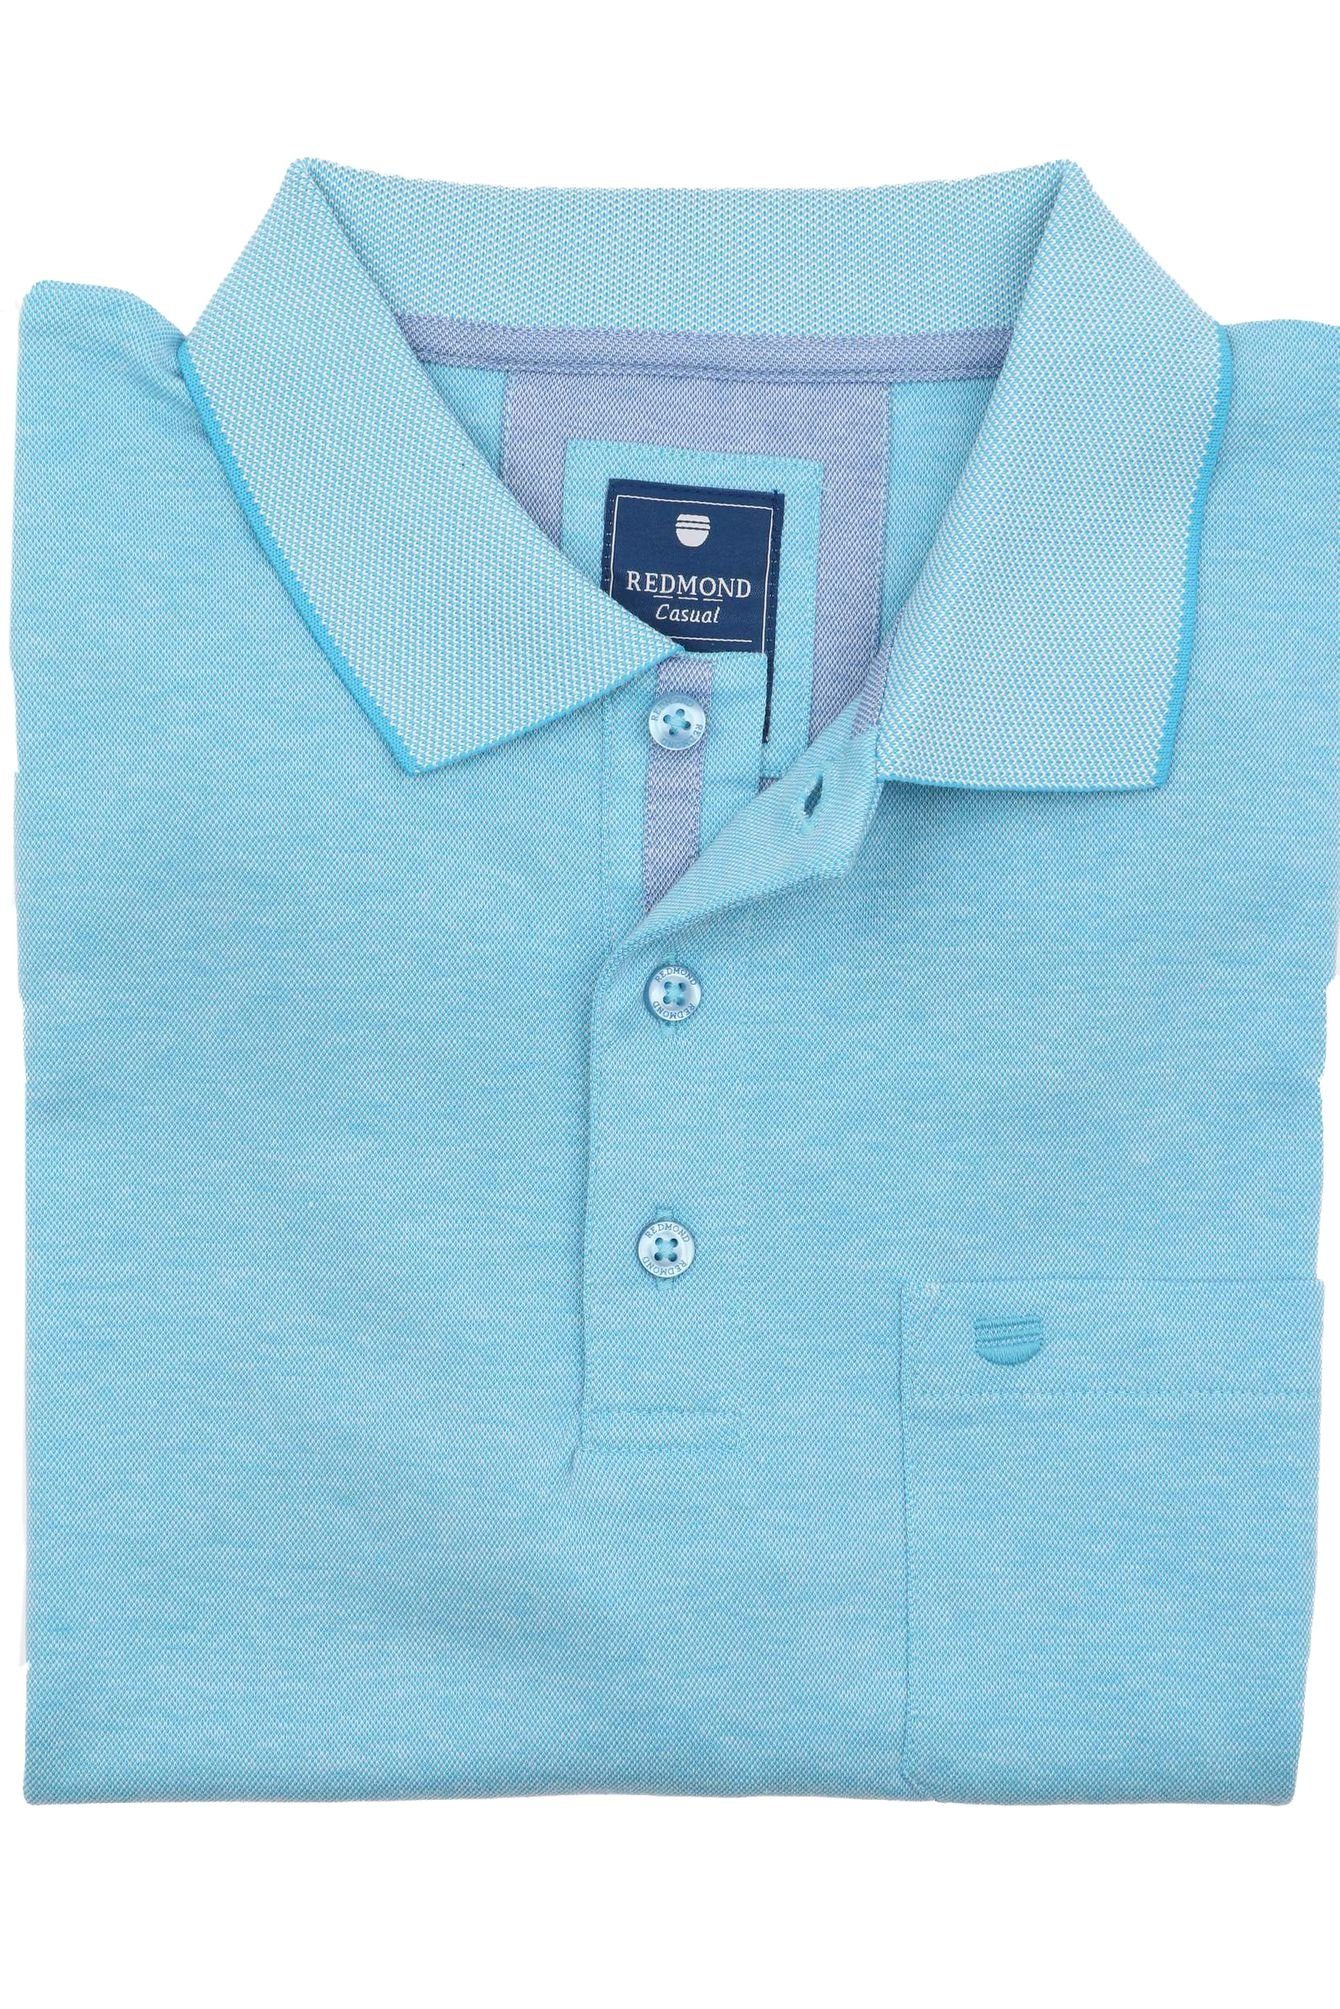 Redmond Poloshirt Poloshirt (15) Blau